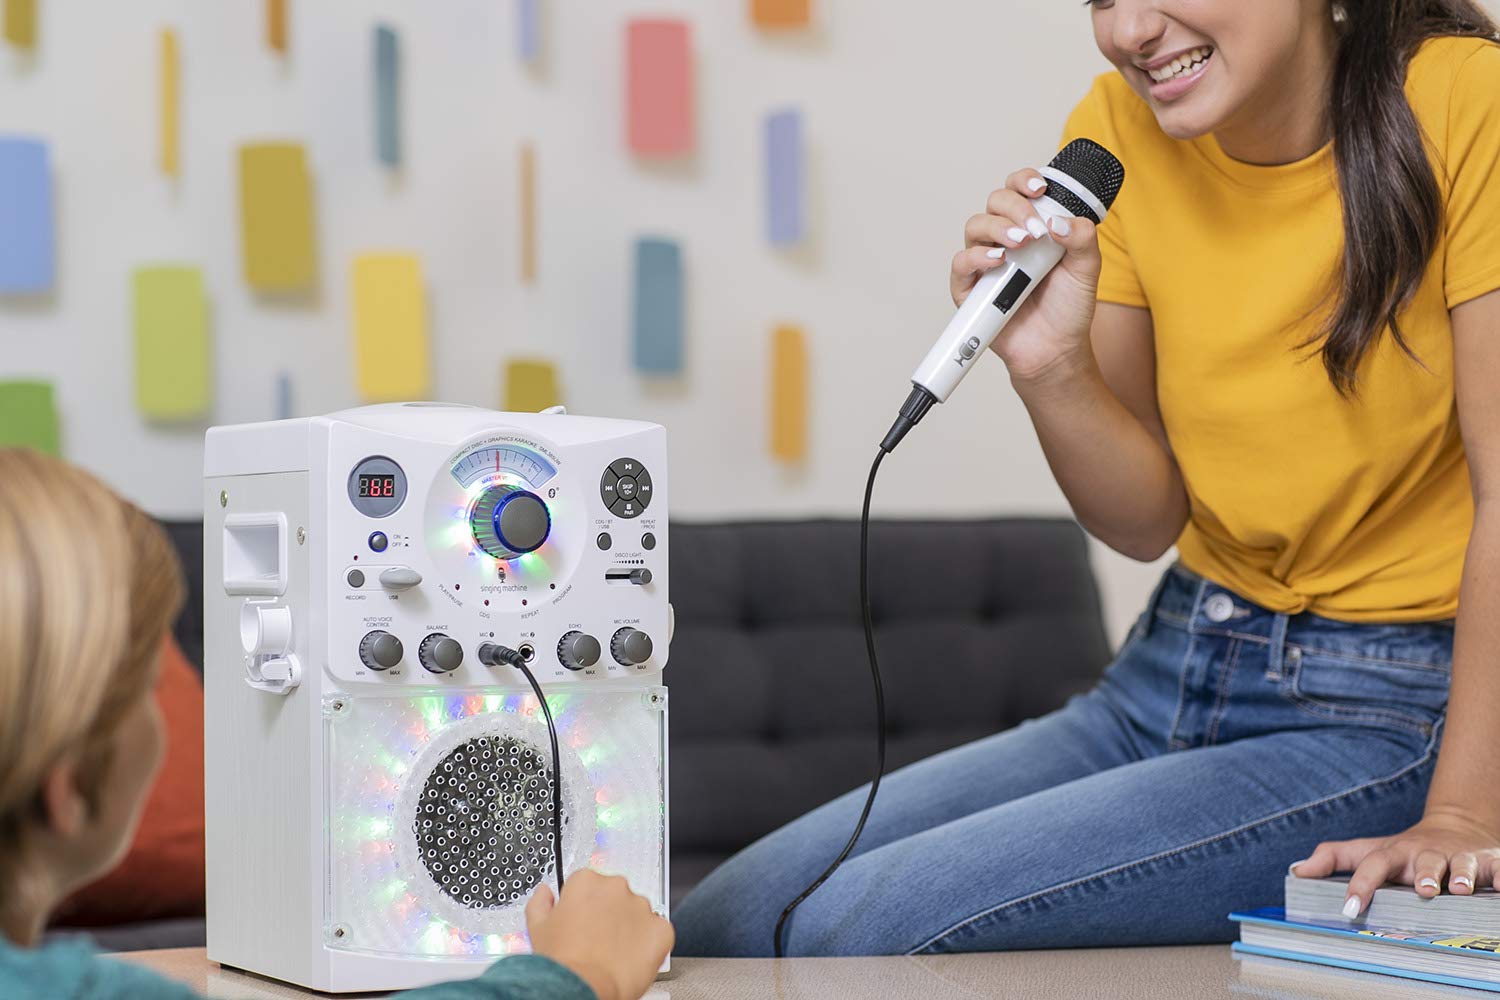 Singing Machine Karaoke Machine, White (SML385BTW)